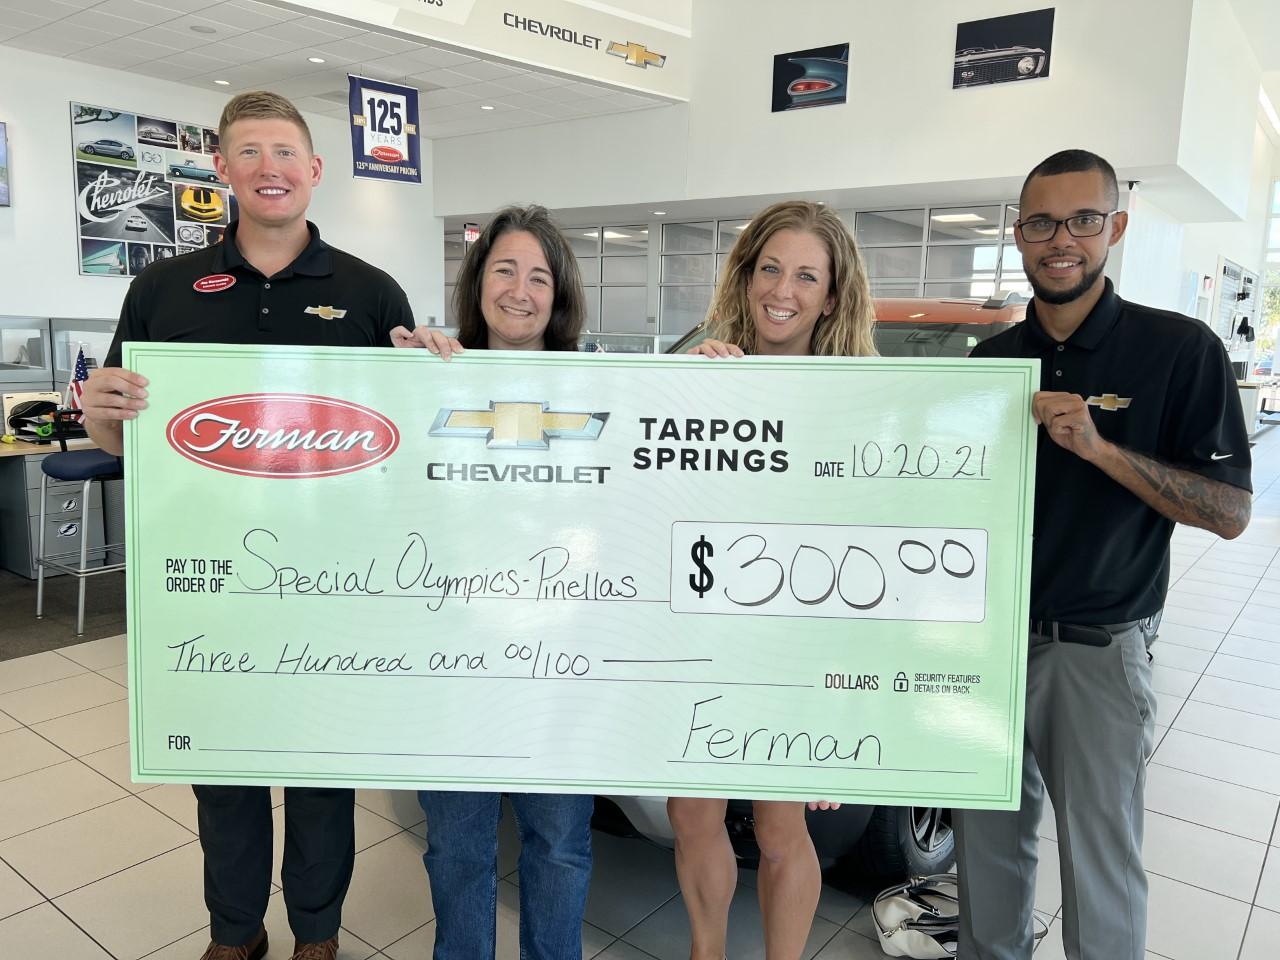 Ferman Chevy Tarpon Springs sponsors Florida Special Olympics - Pinellas